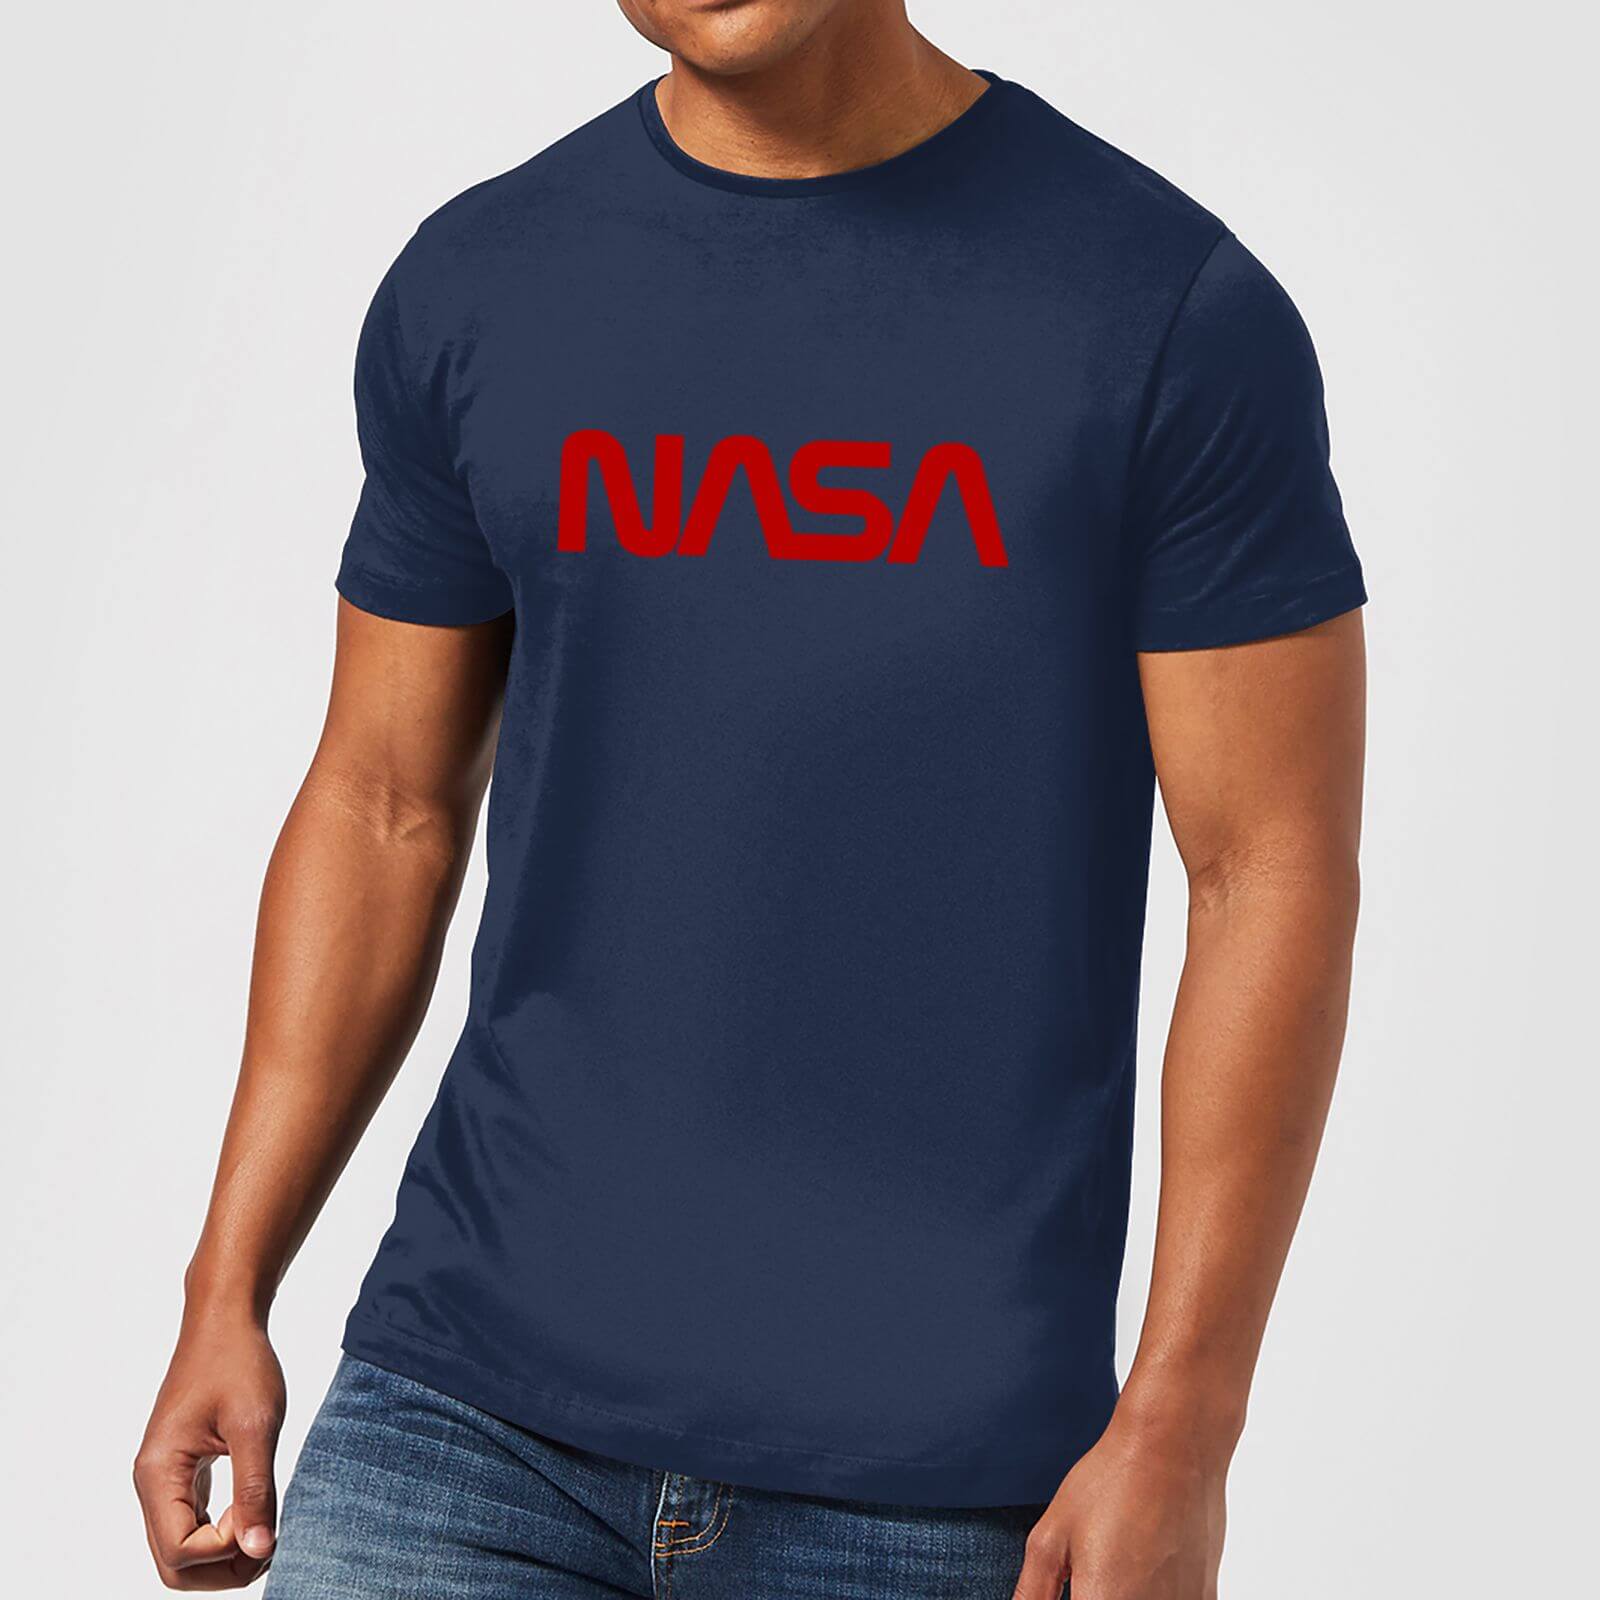 NASA Worm Red Logotype T-Shirt - Navy - L